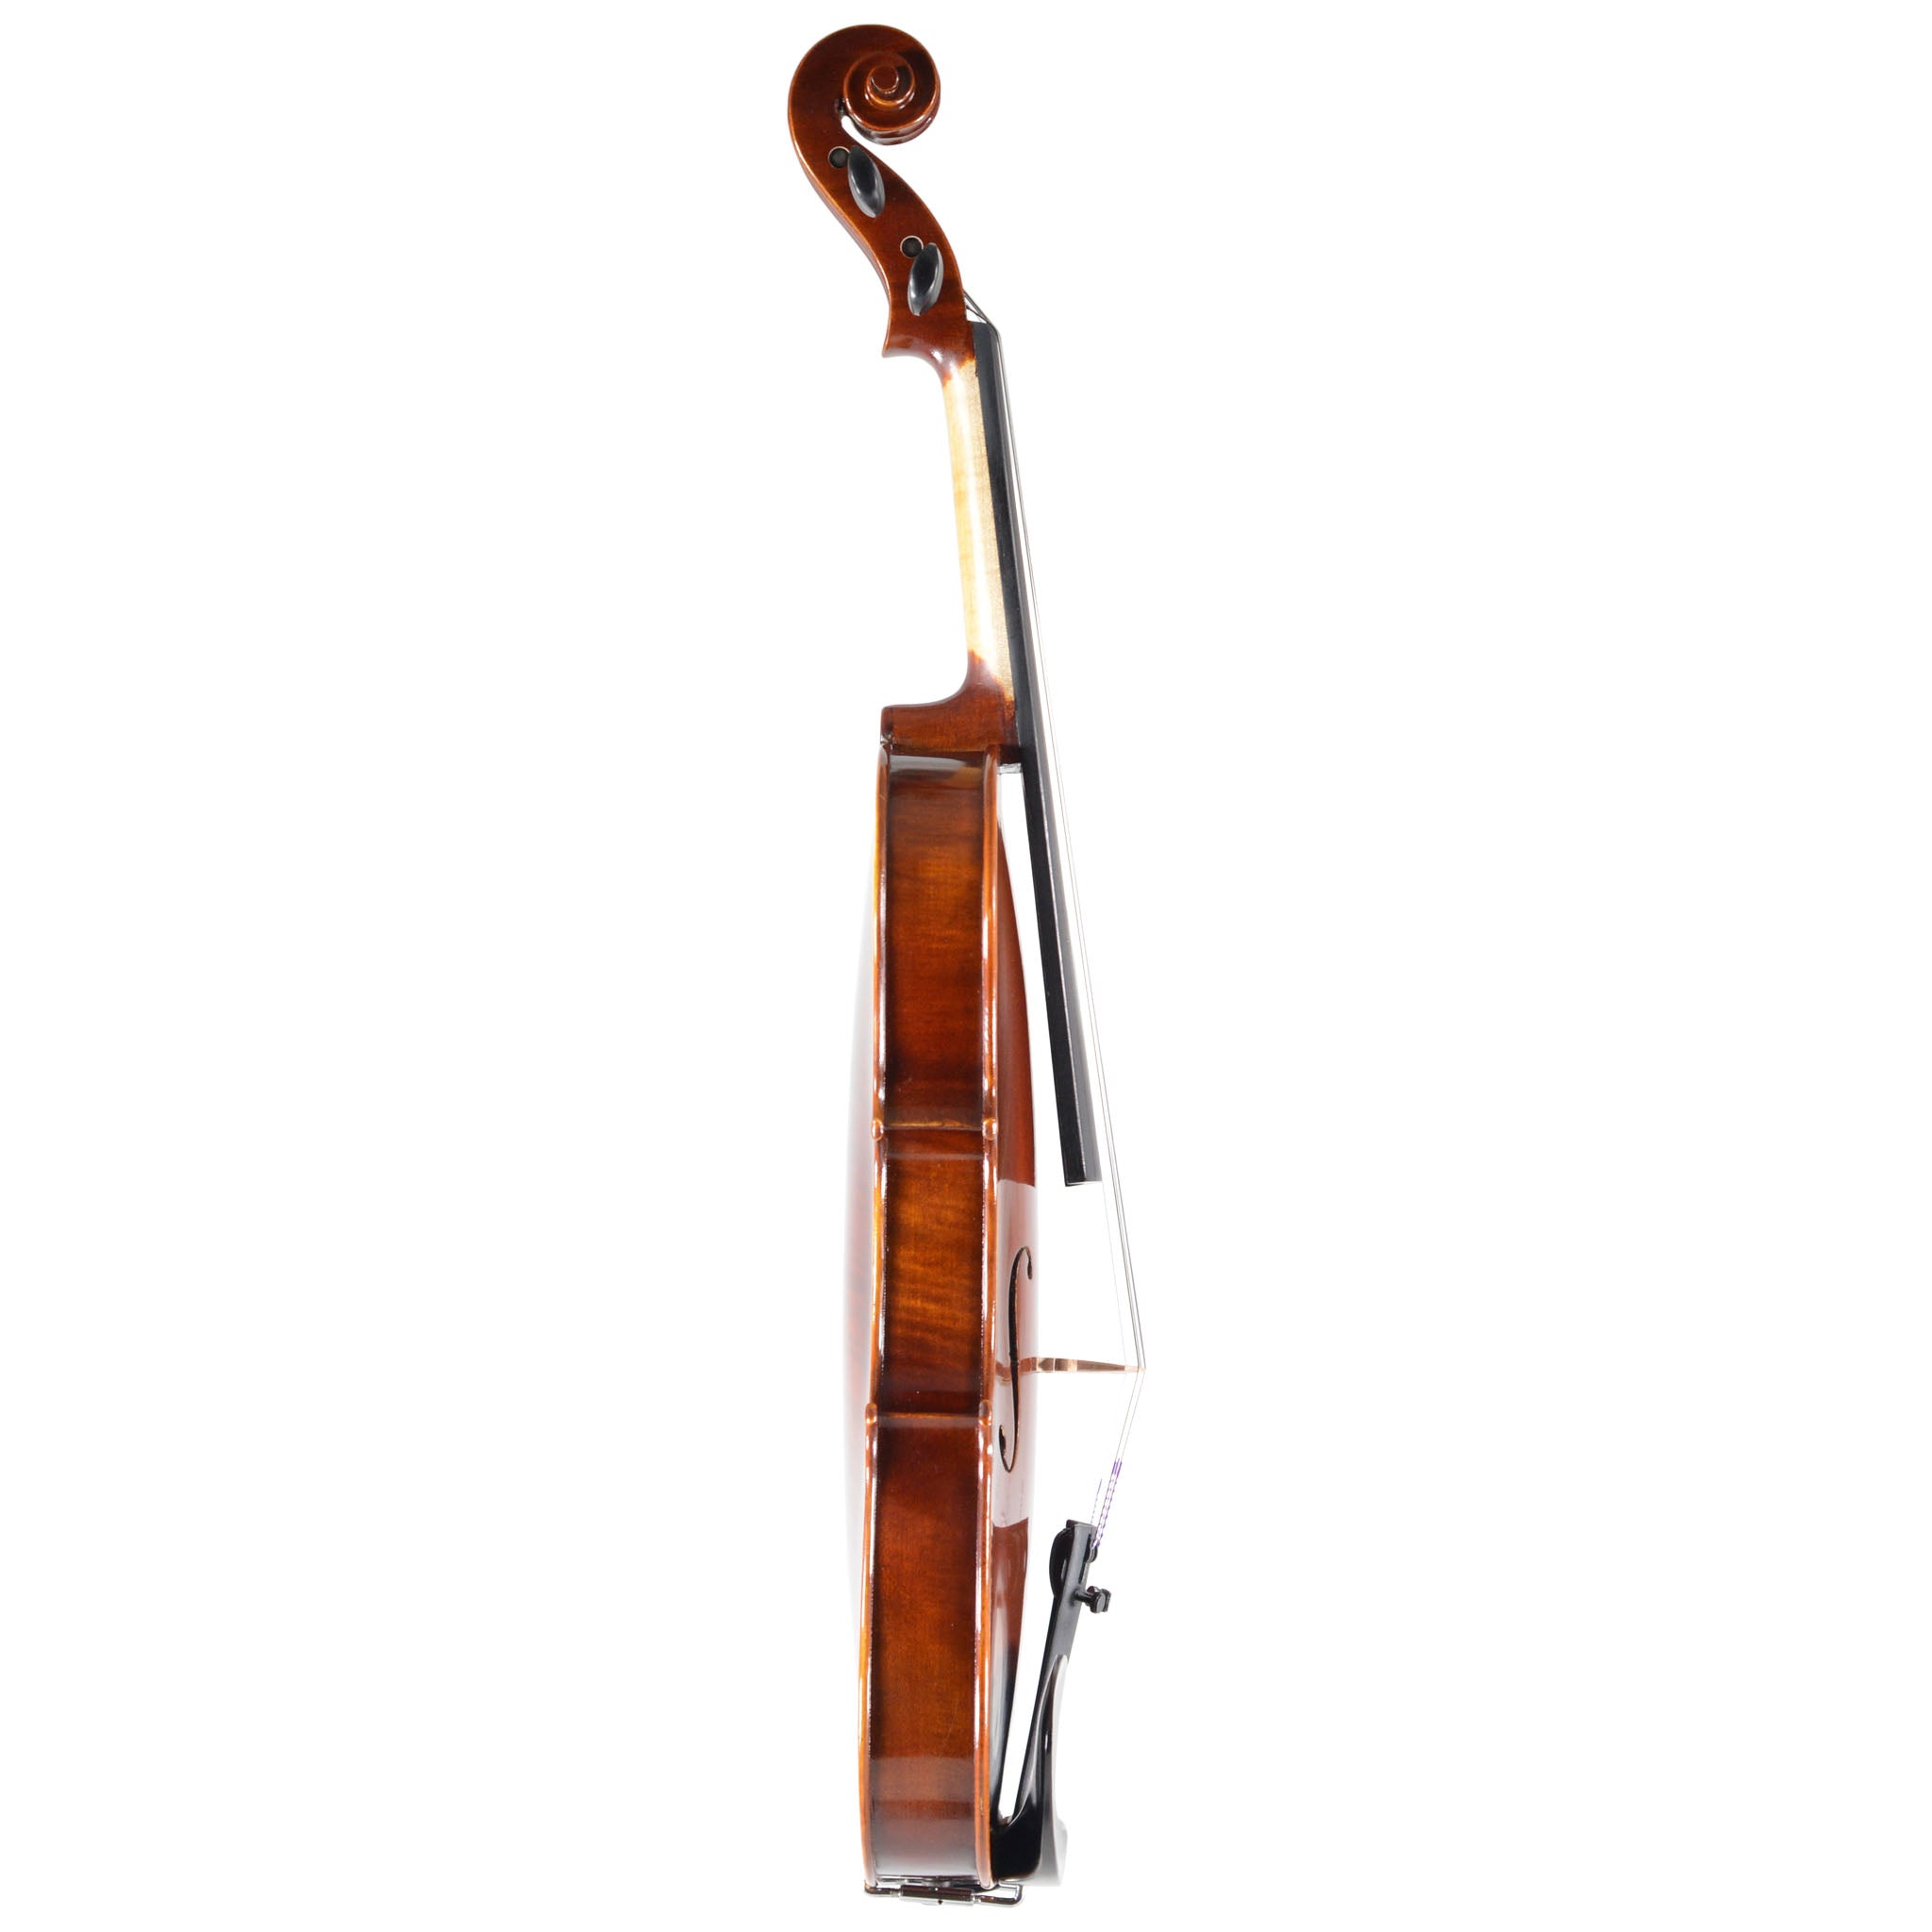 B-stock Fiddlershop Full Size Violin (FS434)